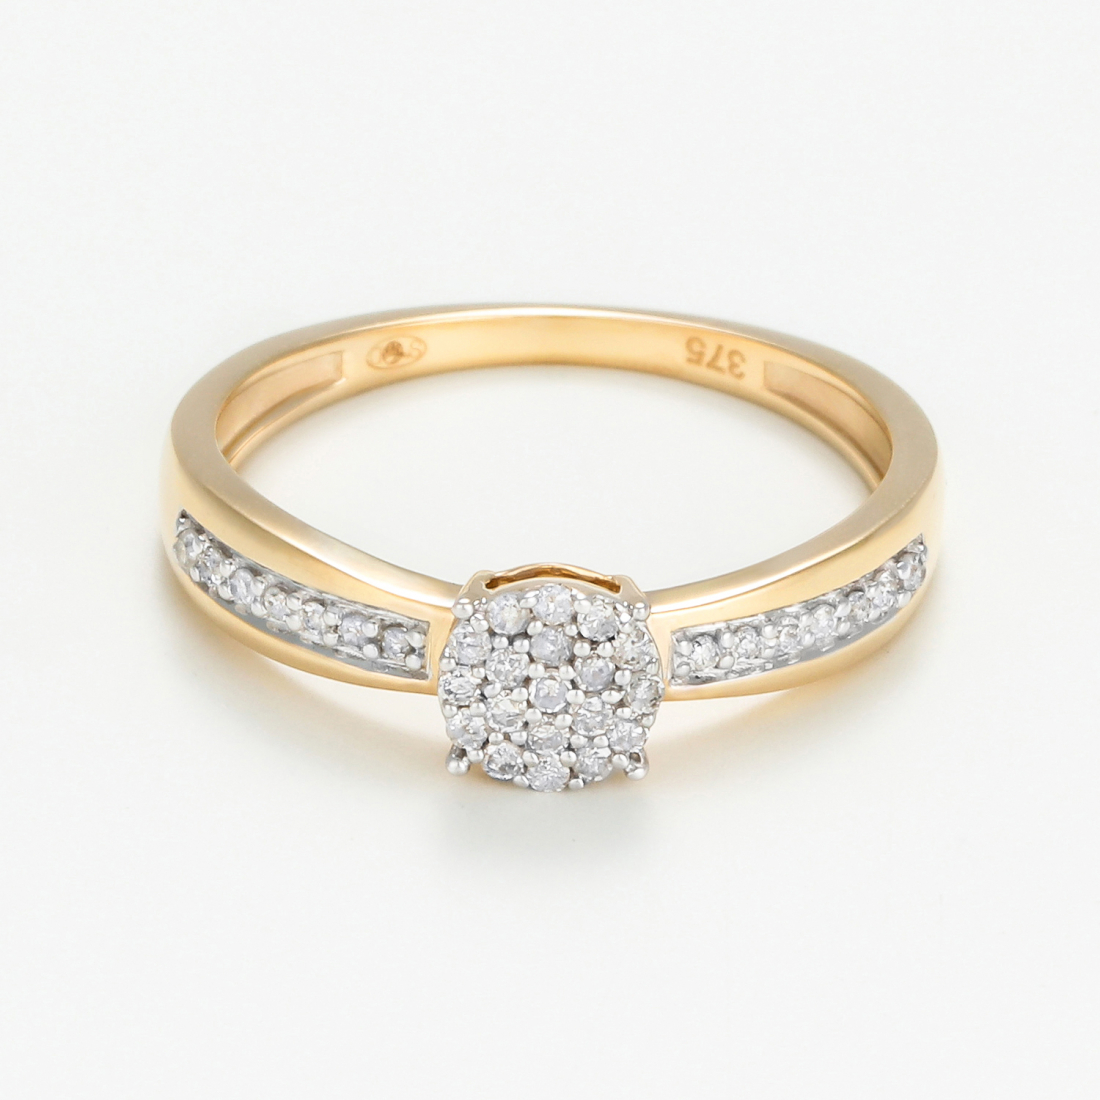 Women's 'Romantic' Ring